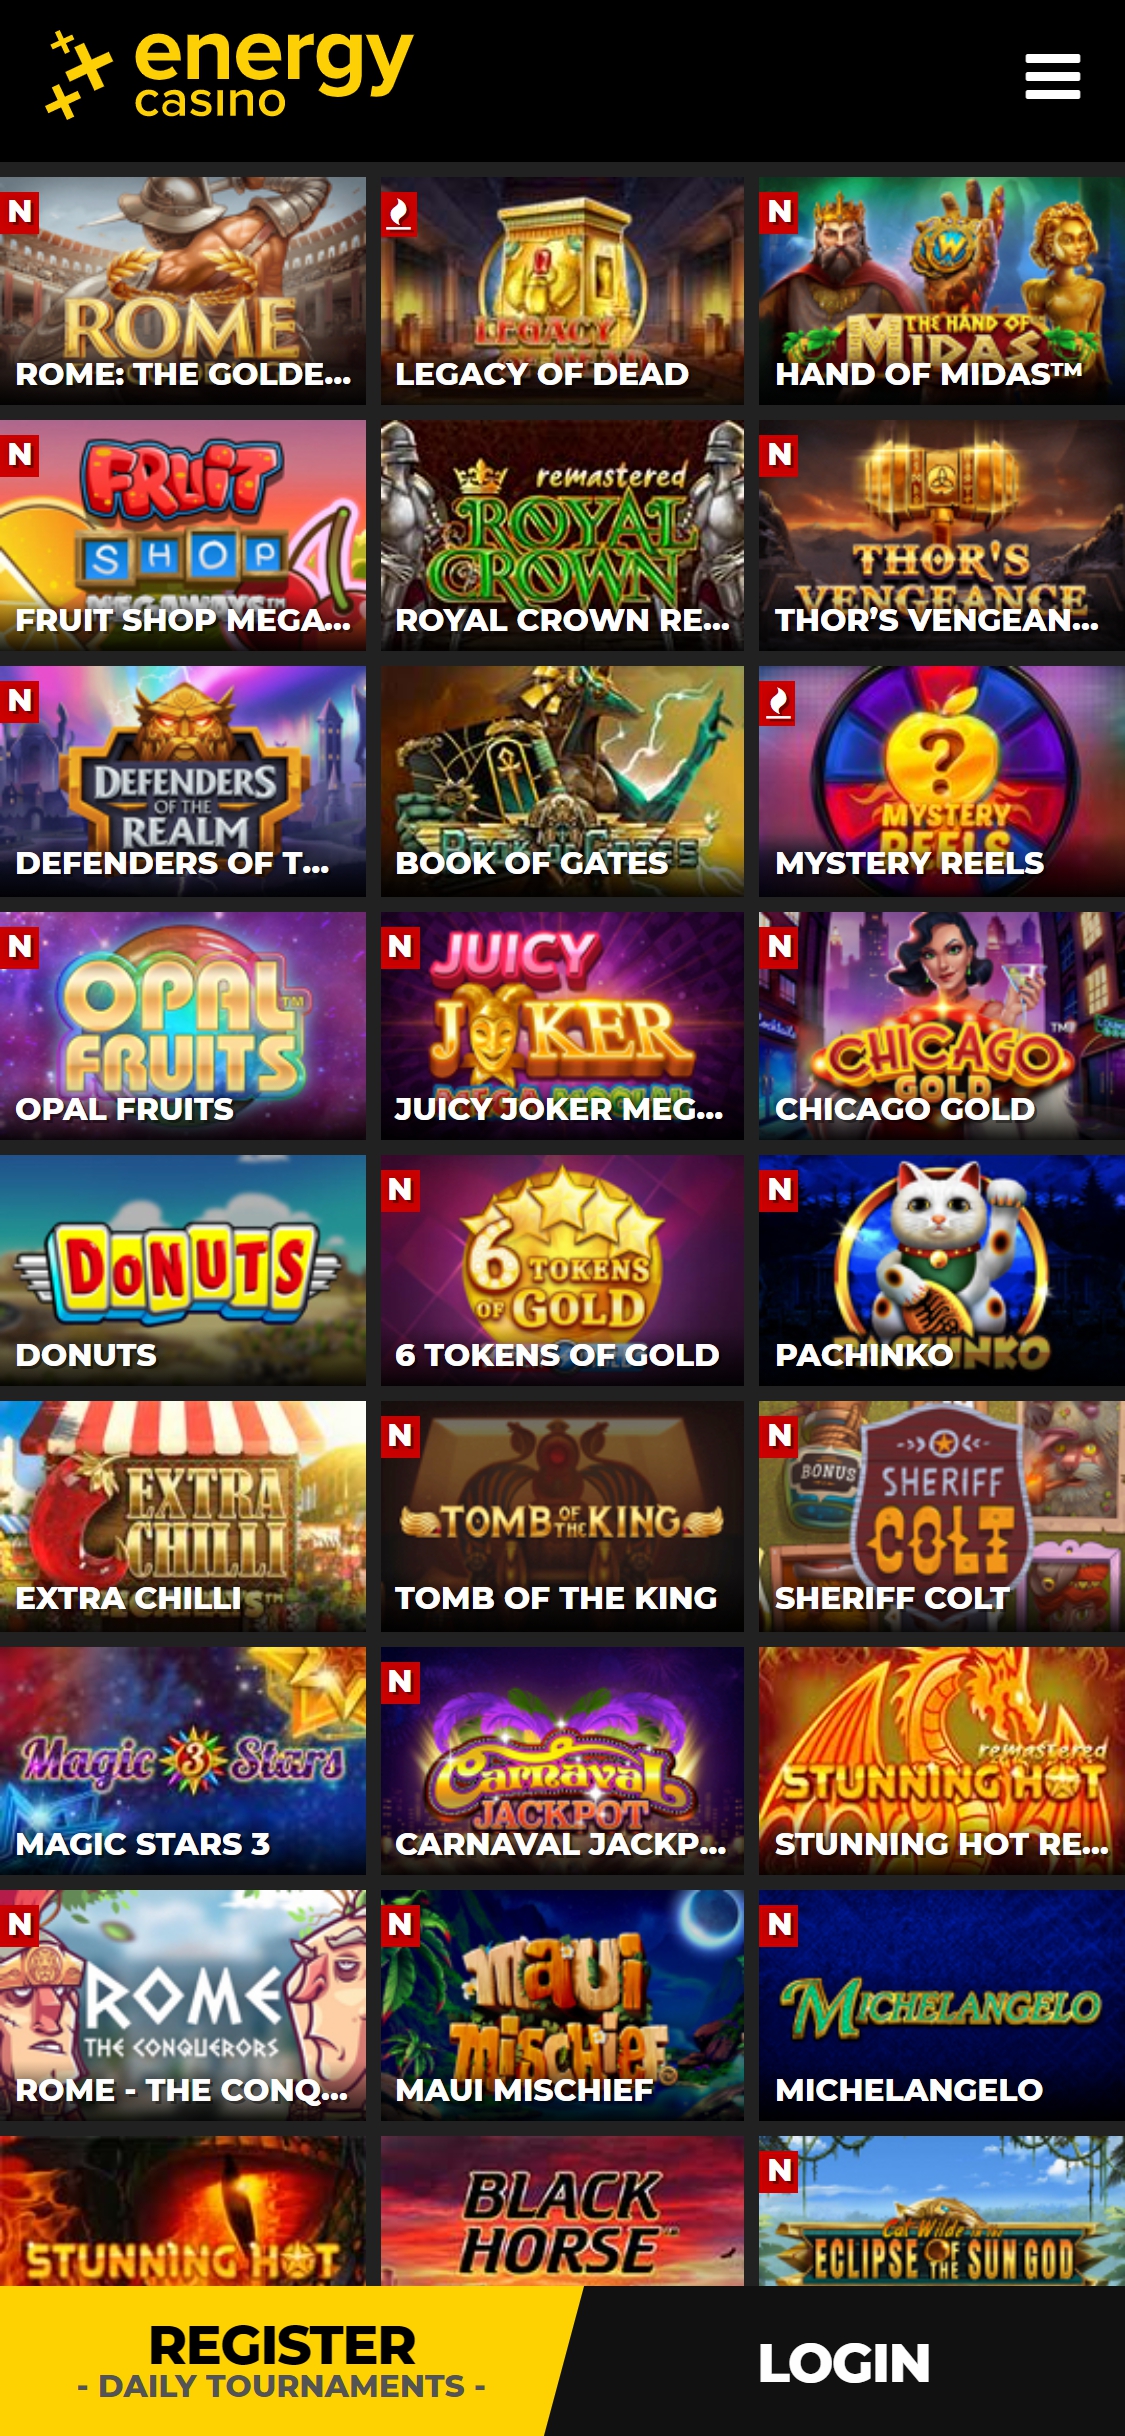 Casino Club Mobile Games Review